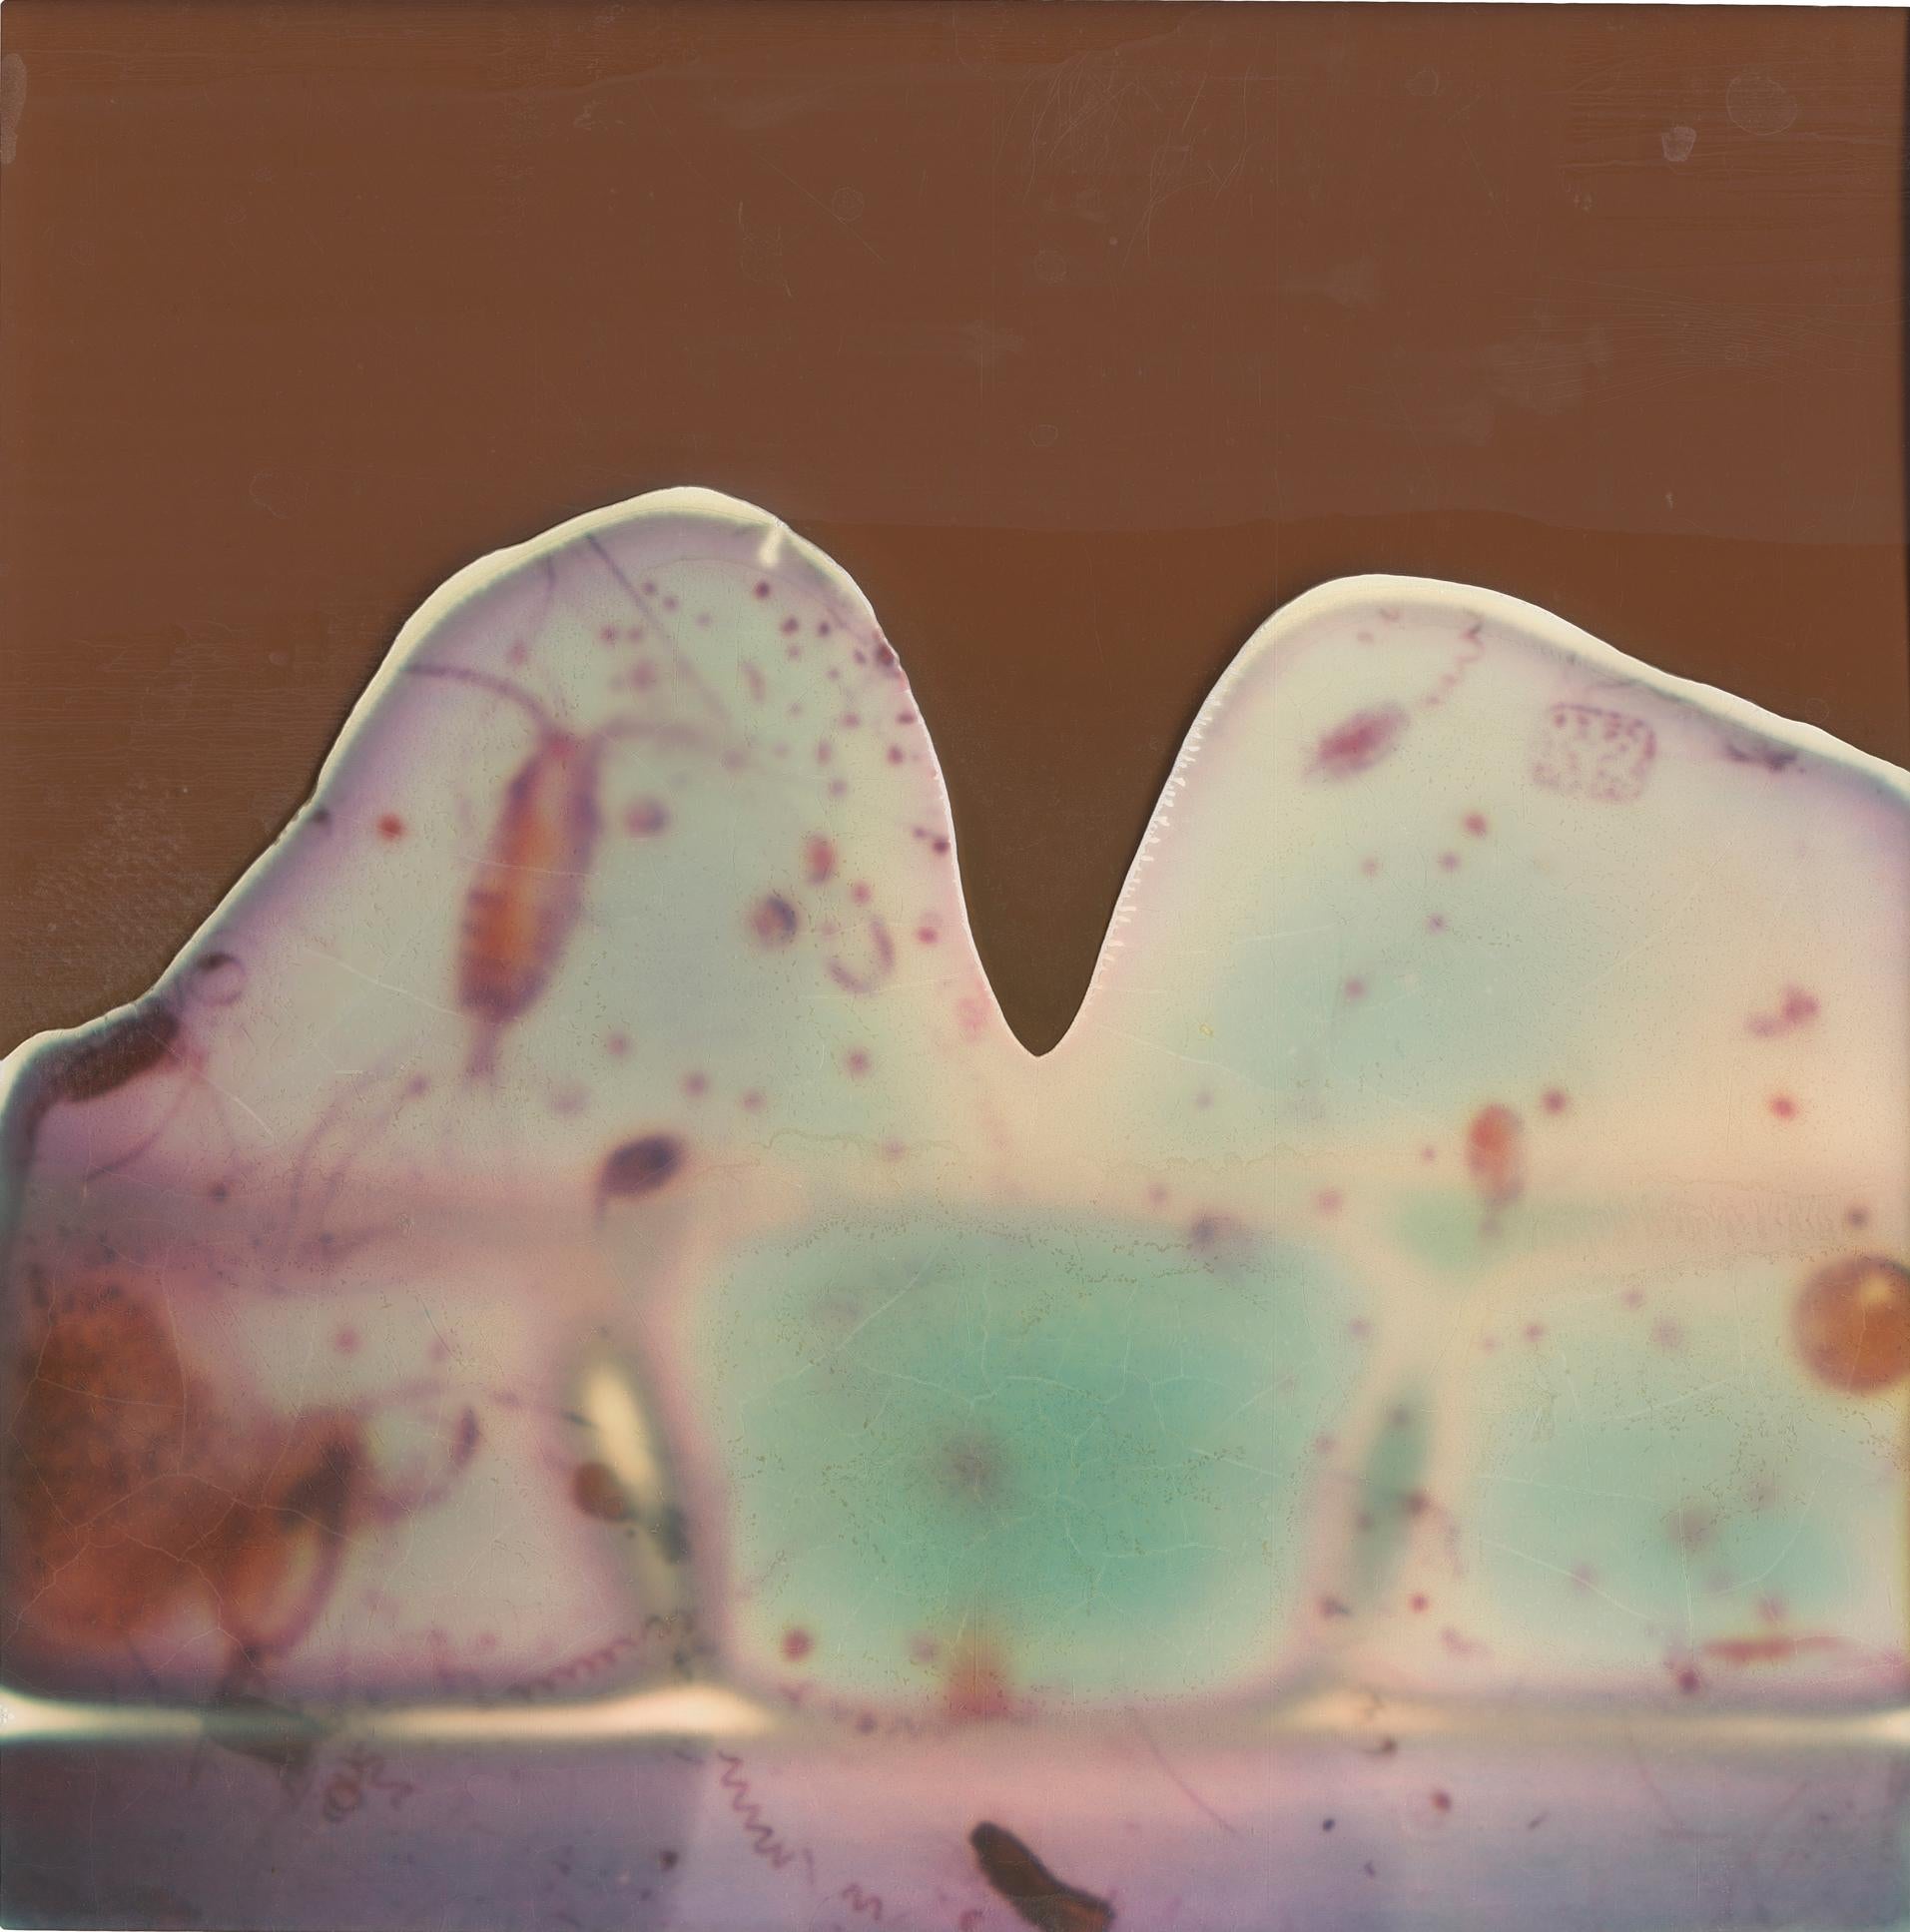 Stefanie Schneider Abstract Photograph - Through the looking Glass (Deconstructivism) - Contemporary, Expired Polaroid